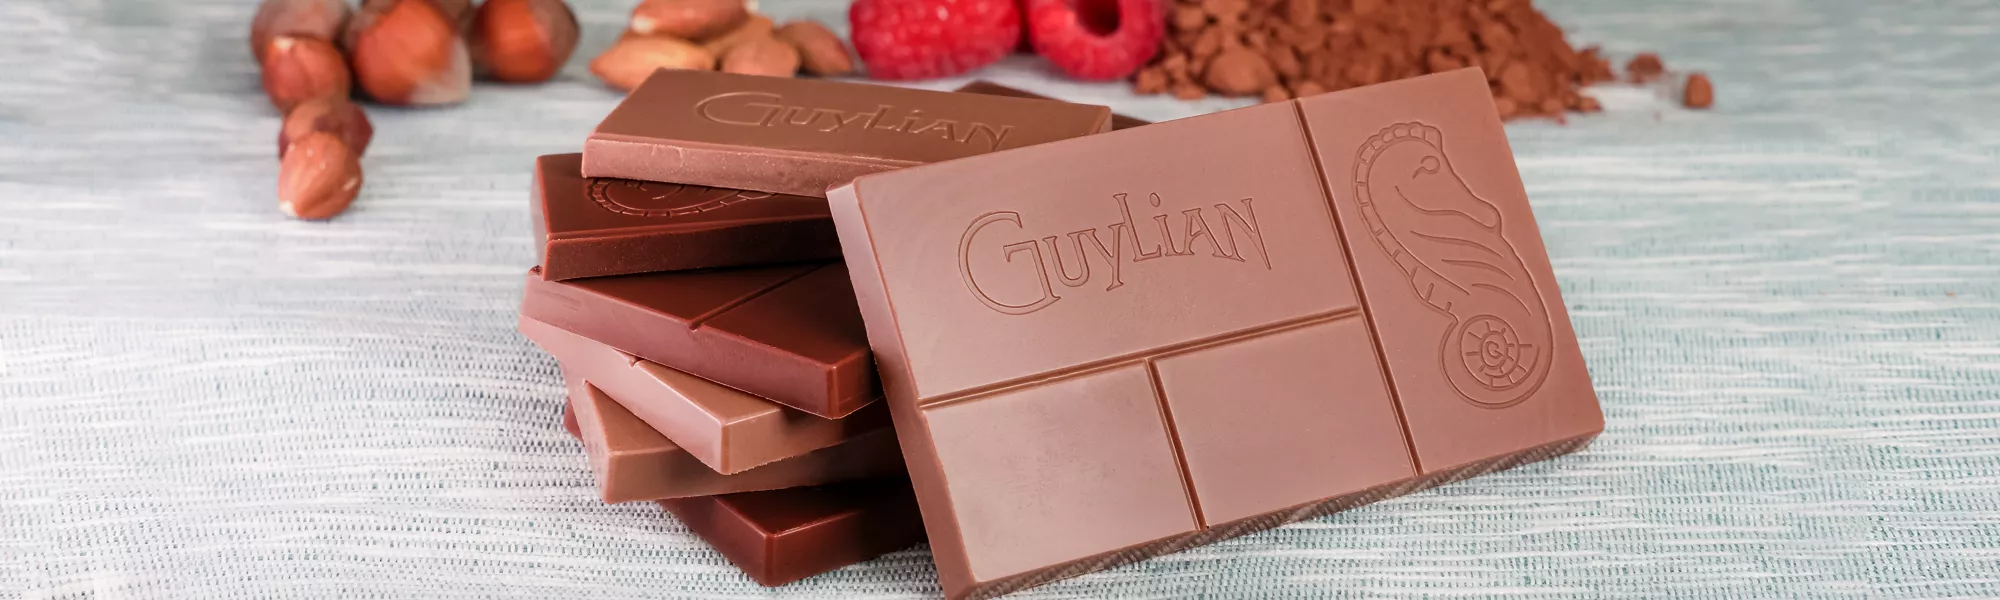 Guylian Chocolade Tablet Multipack 3+1 400g